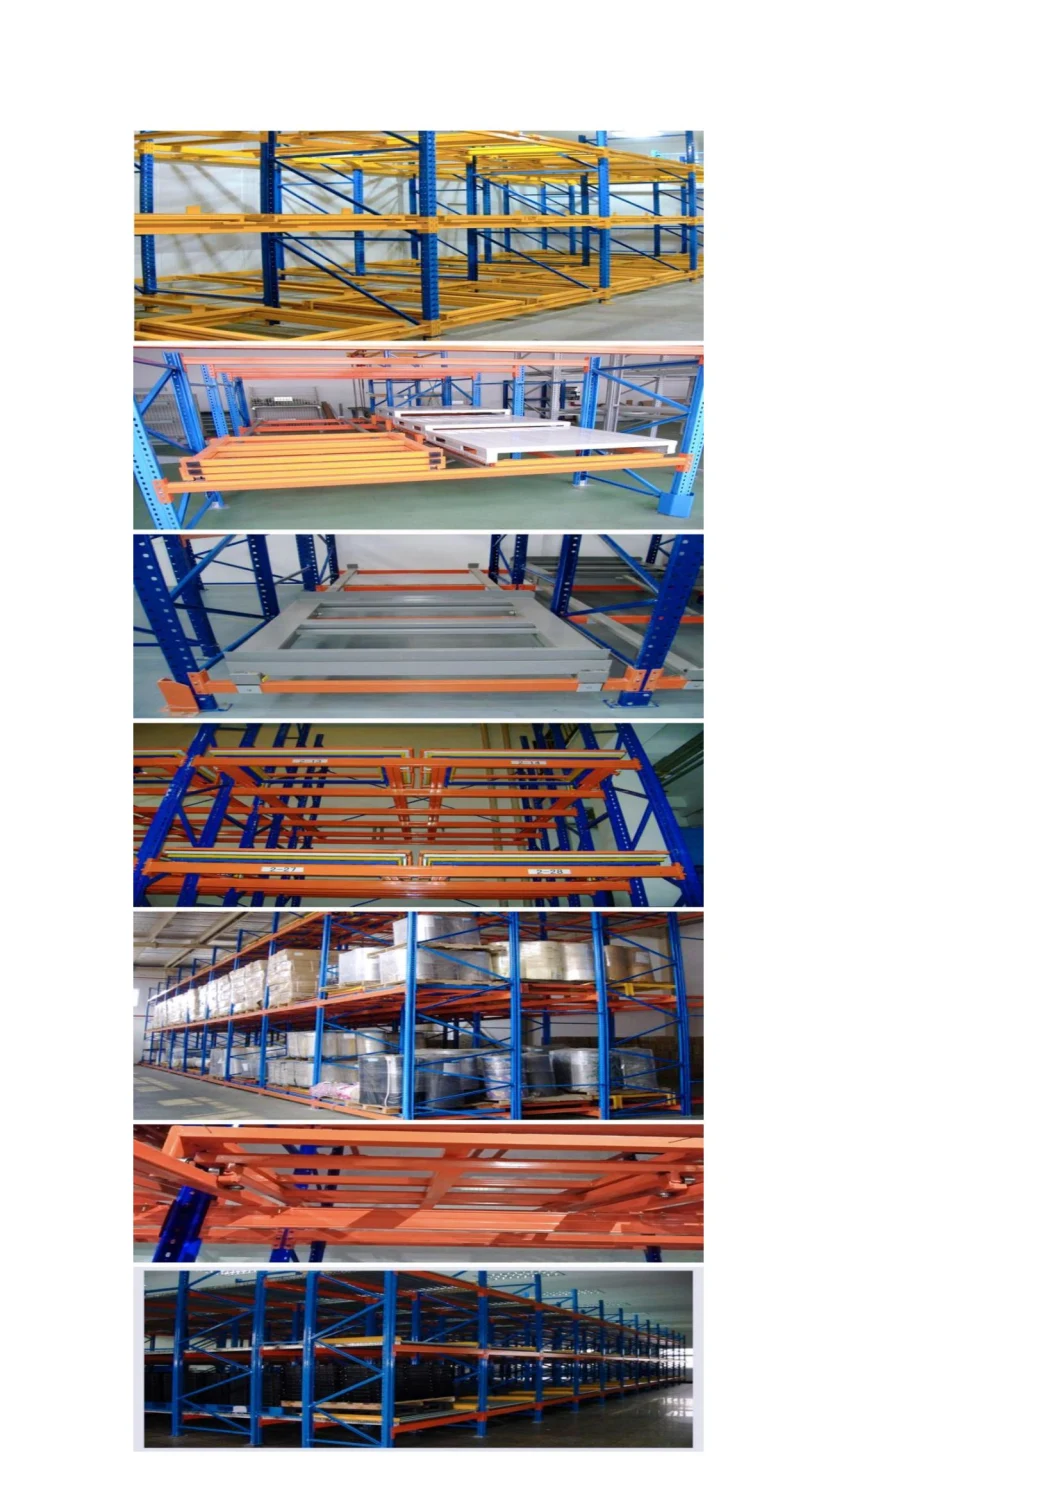 Heavy Duty Push Back Shelf Racking Drive in Pallet Roller Rack System for Warehouse Storage